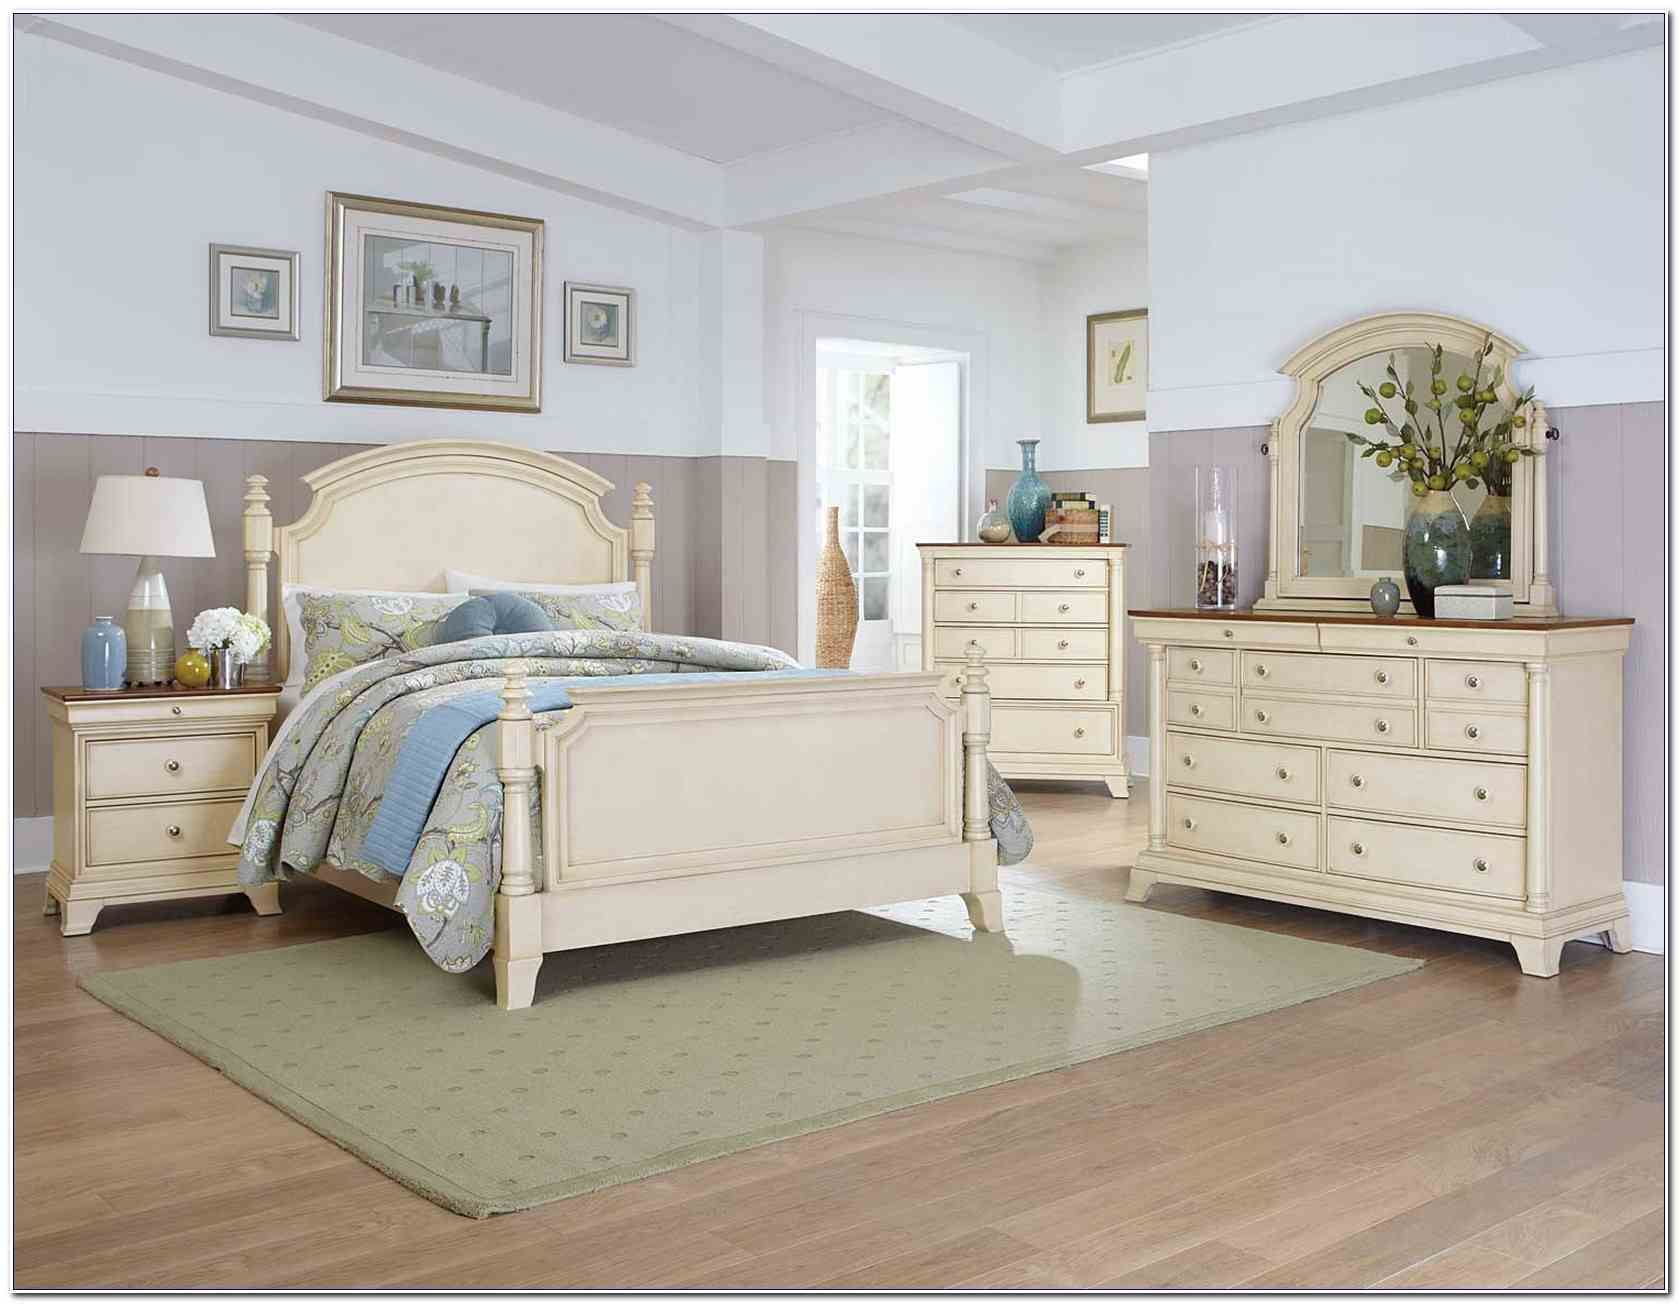 Cream Colored Bedroom Furniture Sets Bedroom Ideas White Bedroom regarding size 1679 X 1304